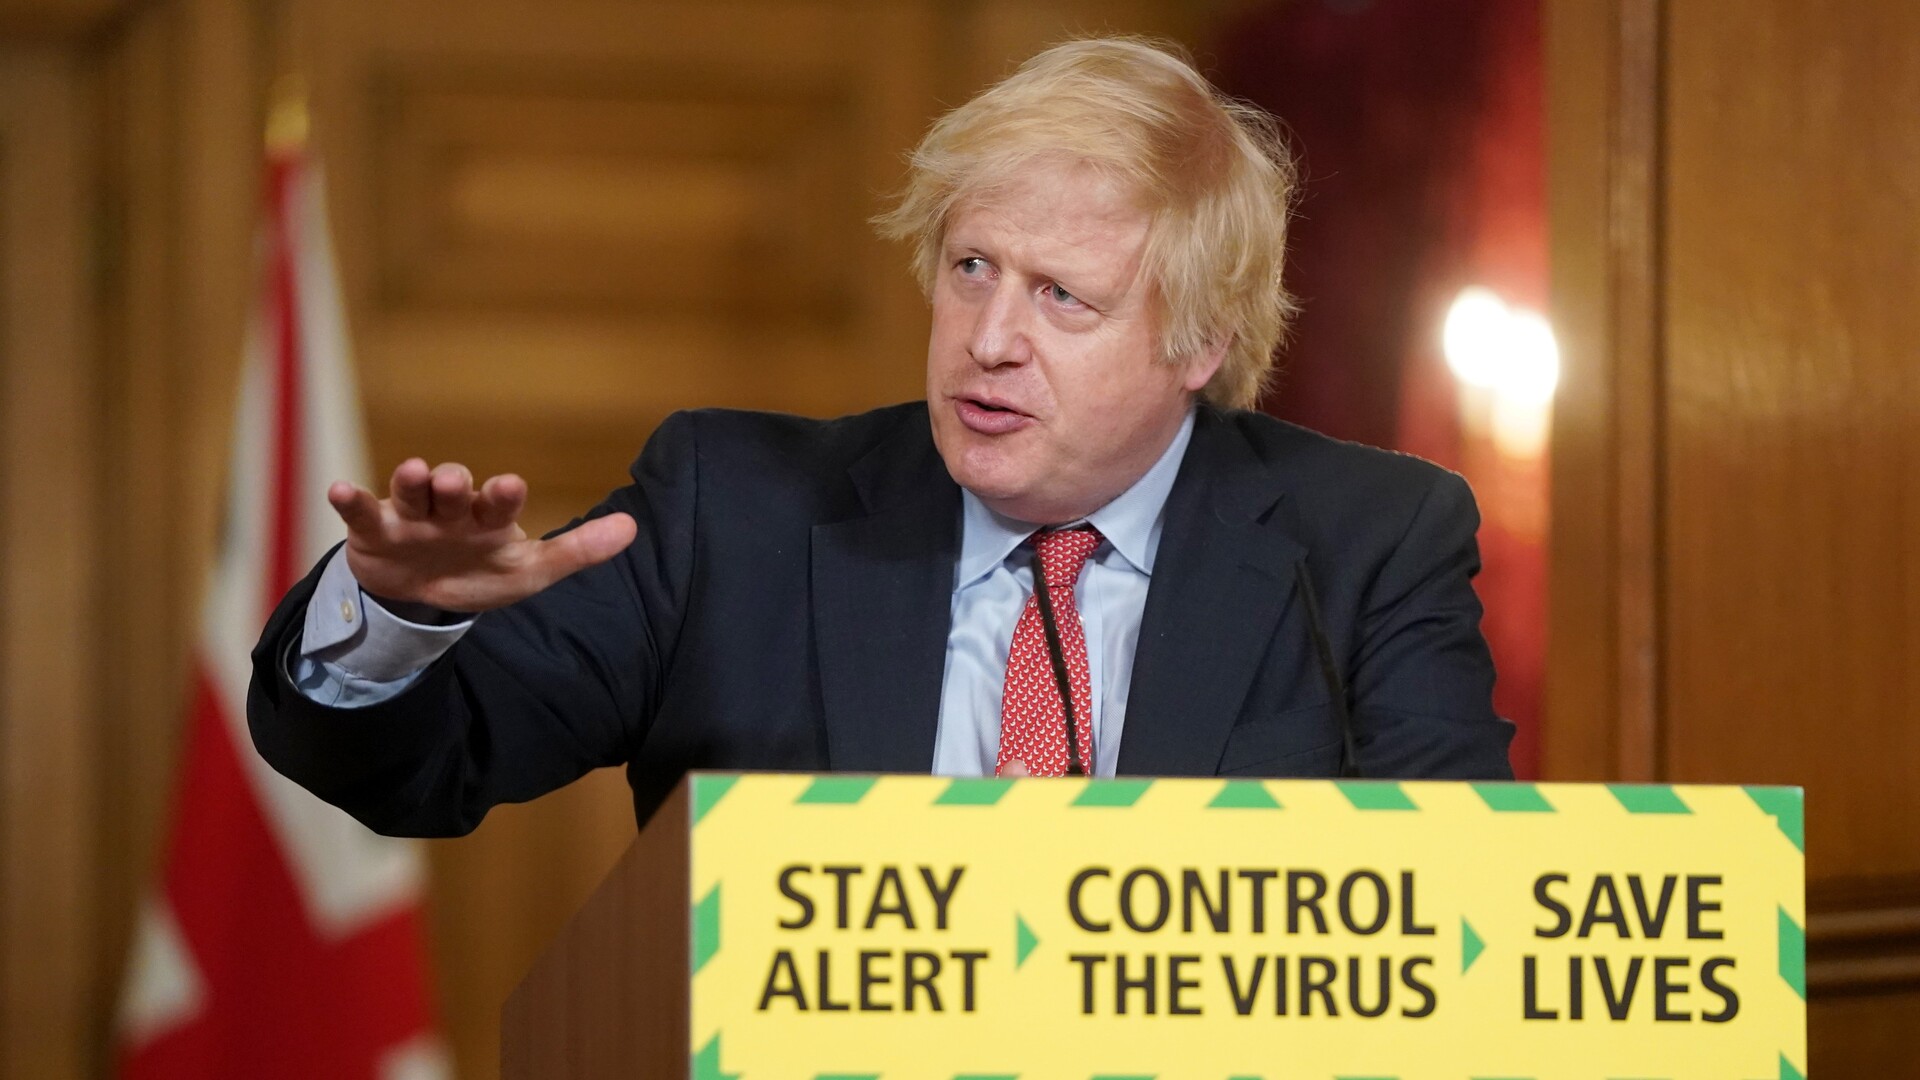 Dan Mygind: Boris Johnsons håndtering af en stor coronaskandale viser, at han har mistet følingen med befolkningen